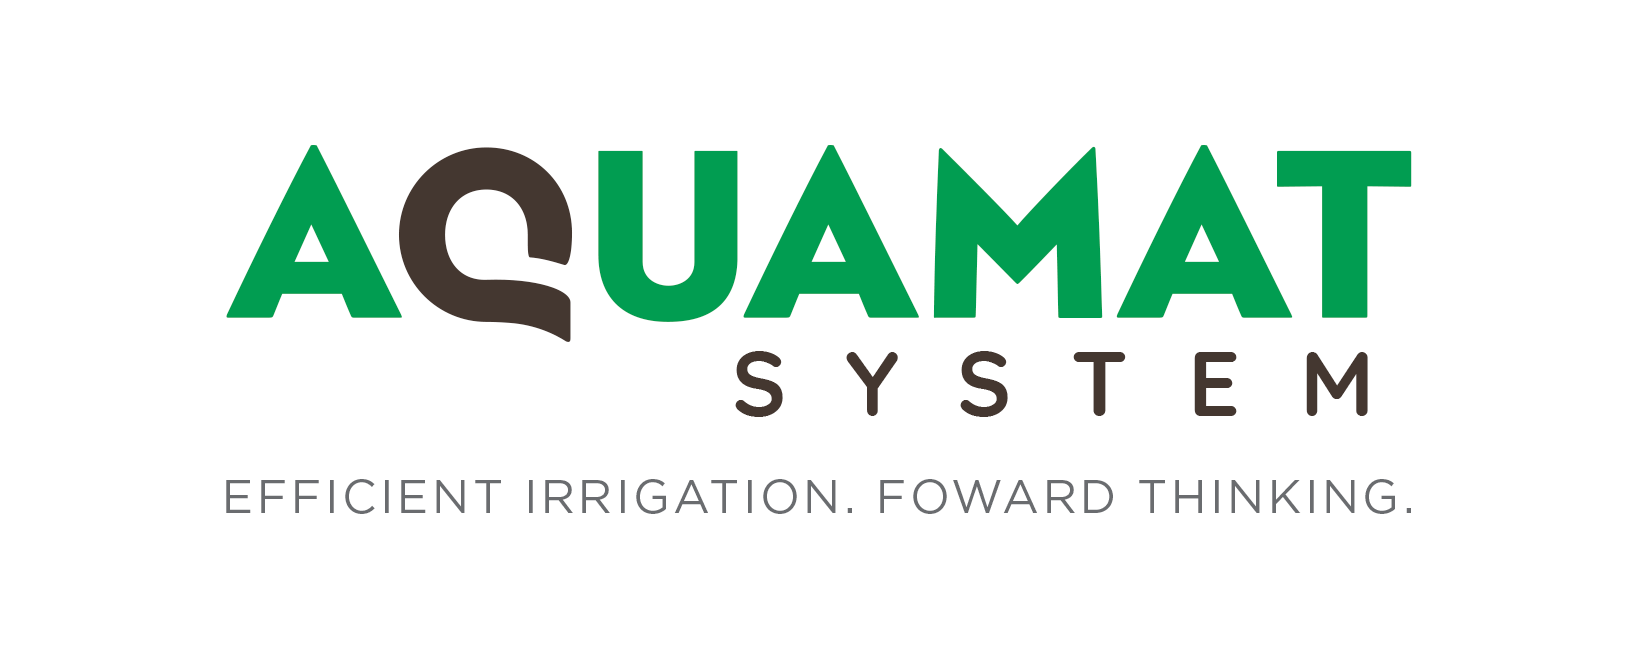 Aquamatsystem - Efficient irrigation - Foward thinking